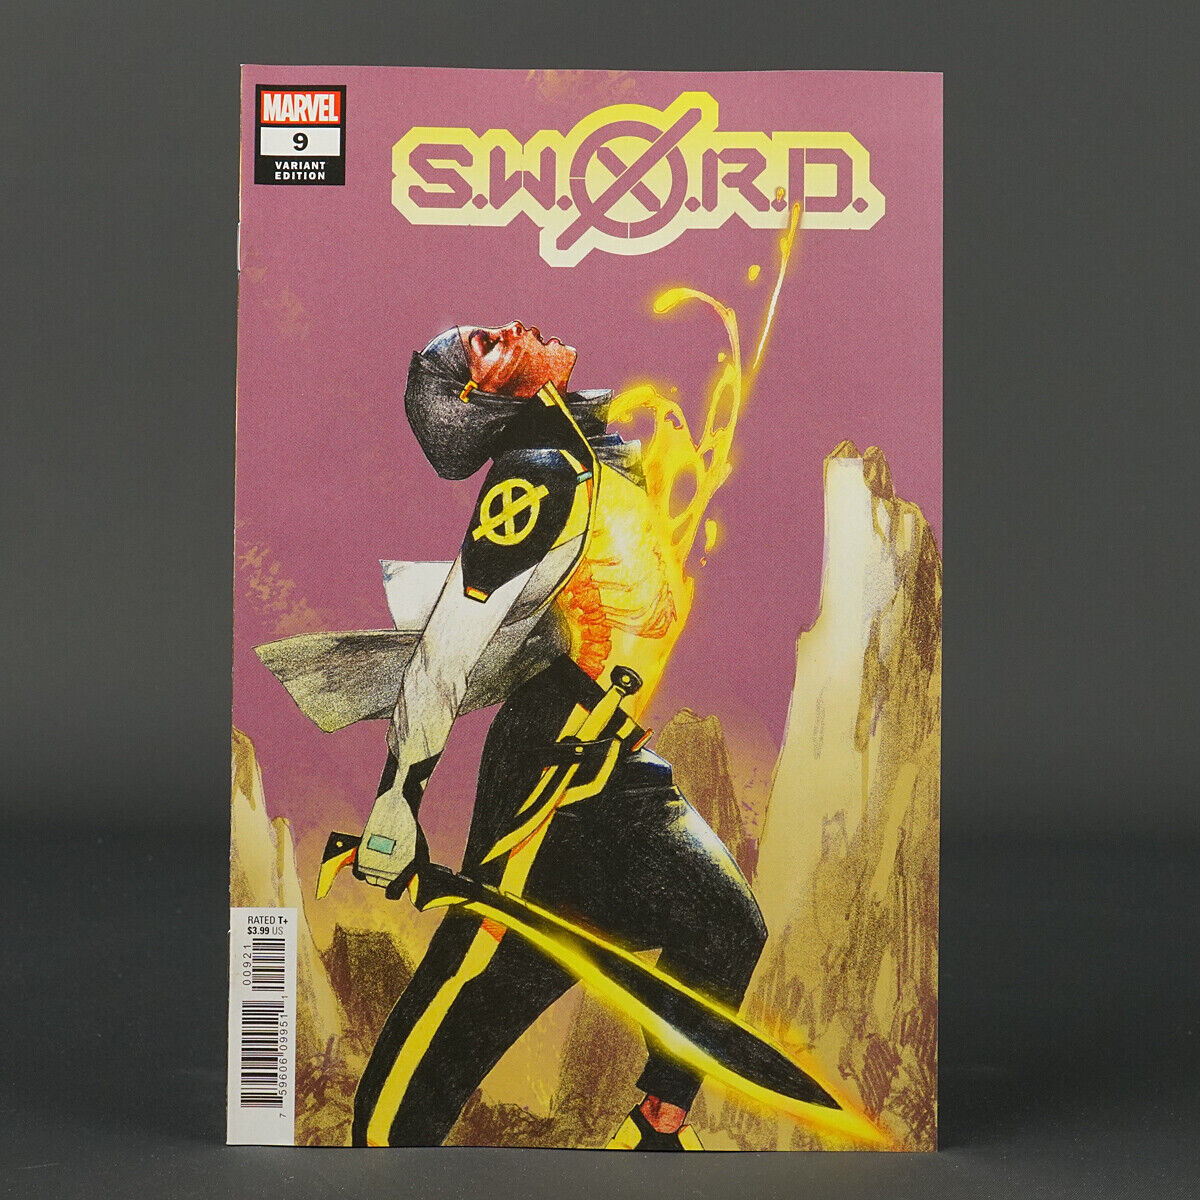 SWORD #9 var Marvel Comics 2021 AUG211148 (W) Ewing (A) Camagni (CA) Go